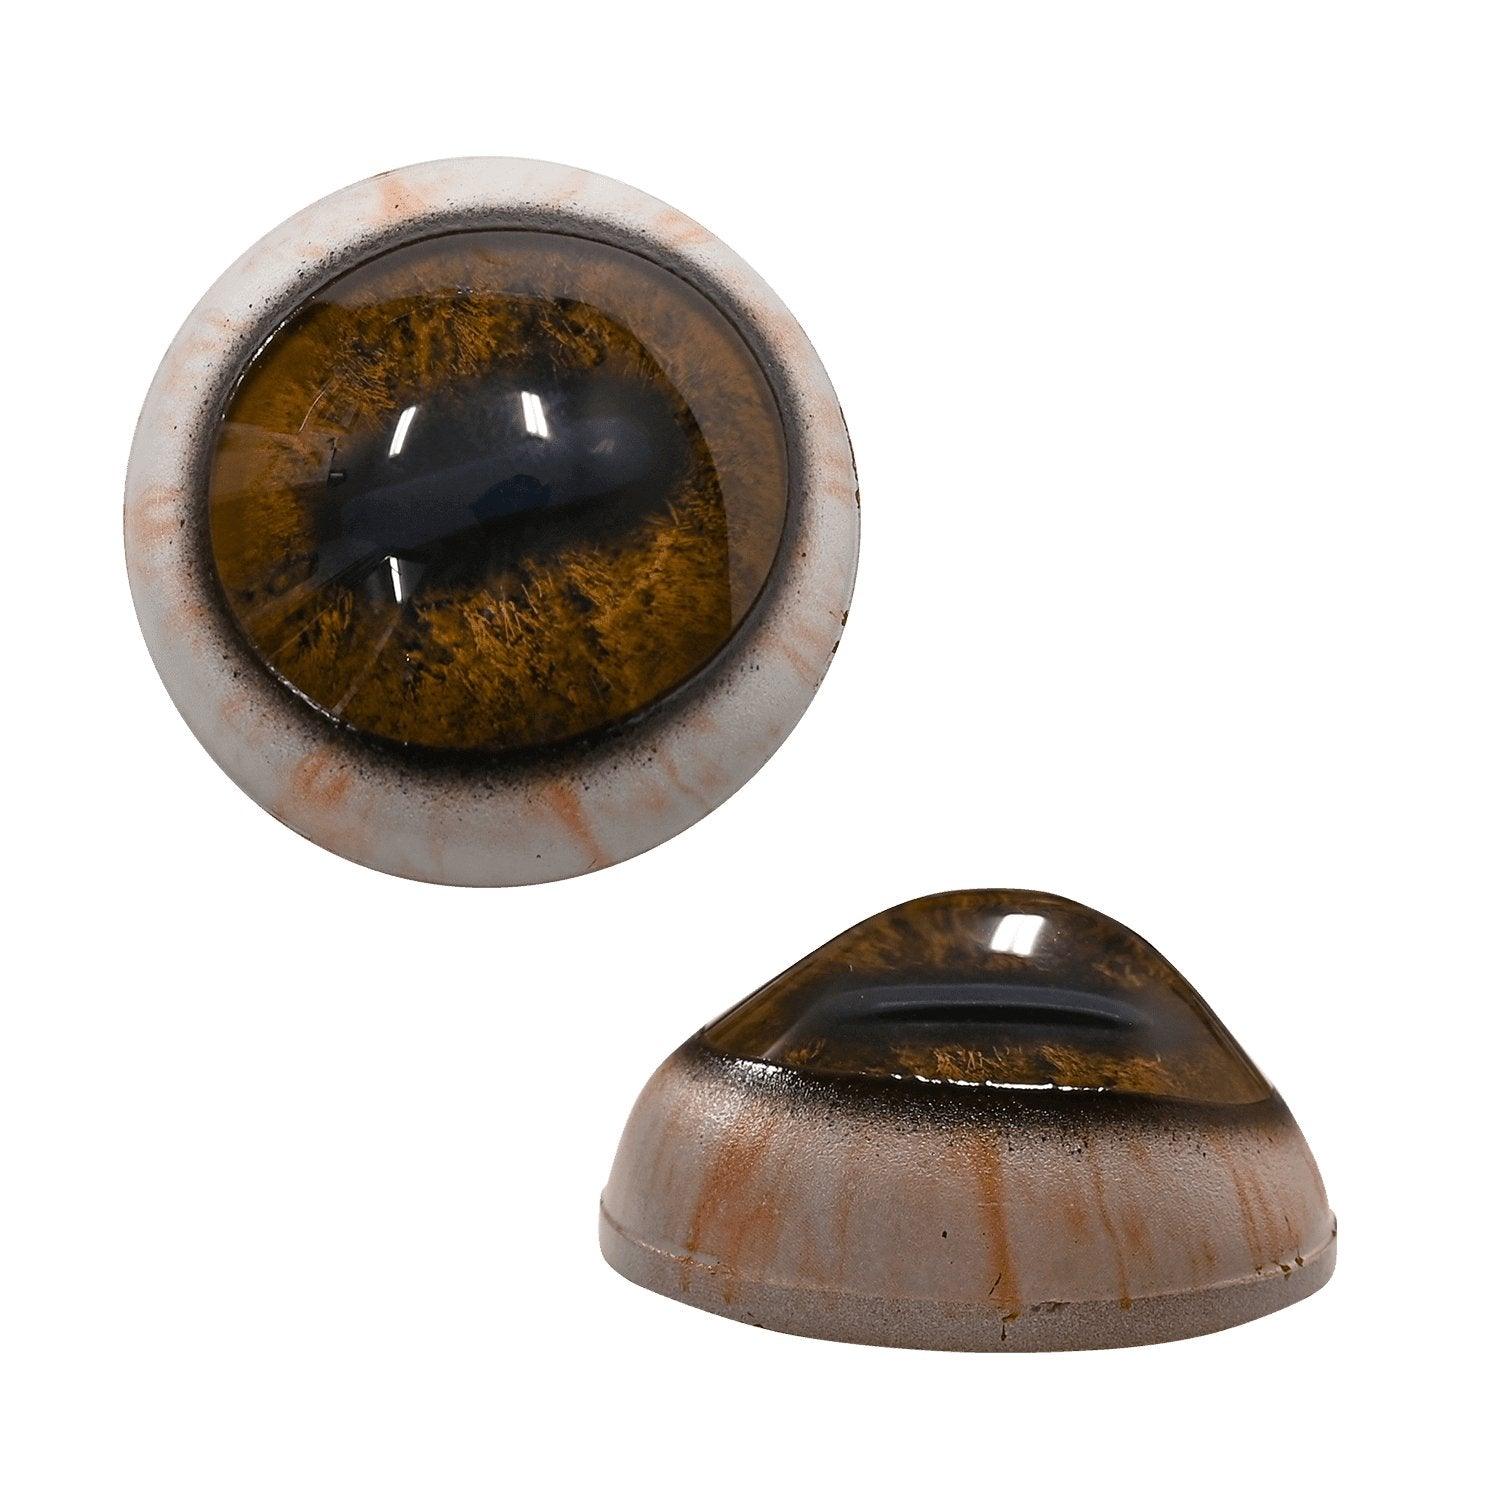 Deer-Whitetail Eyes (Tohickon Glass) - Matuska Taxidermy Supply Company